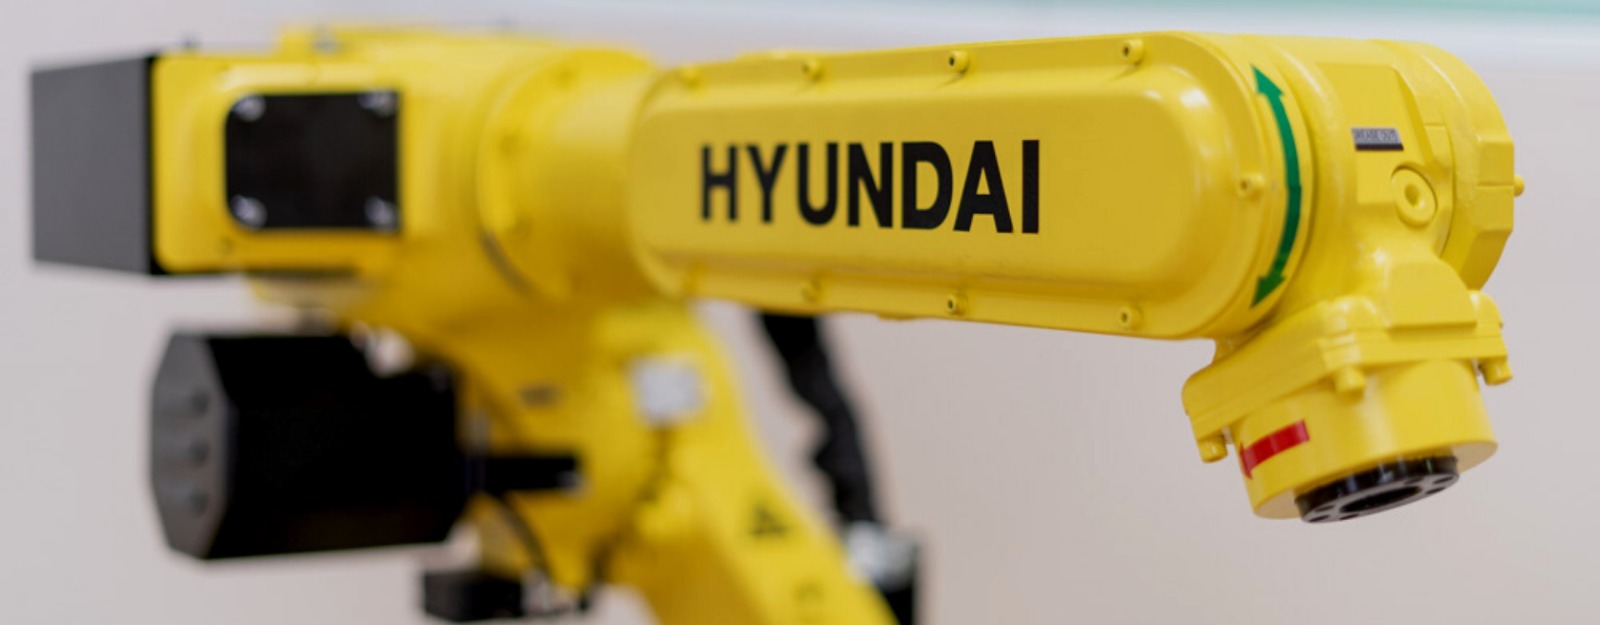 Hyundai Robotics